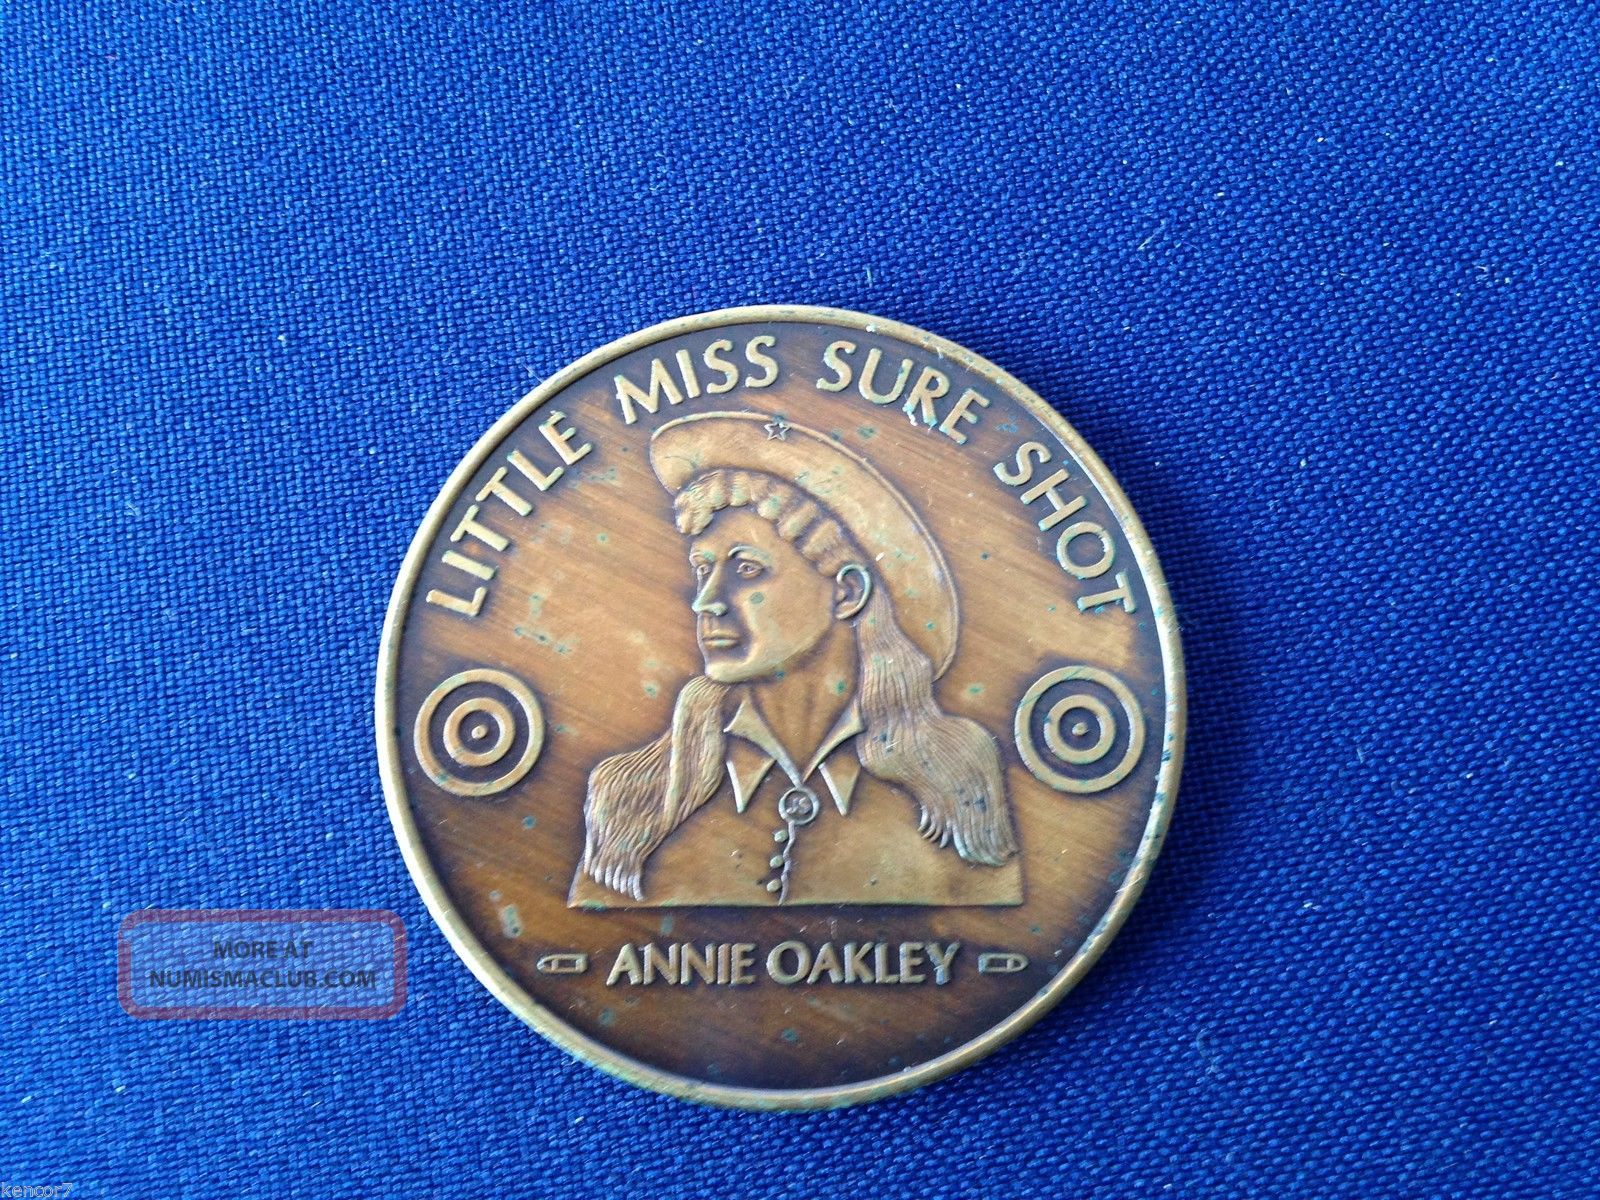 1971 Annie Oakley Little Miss Sure Shot Bronze Art Medal P2193